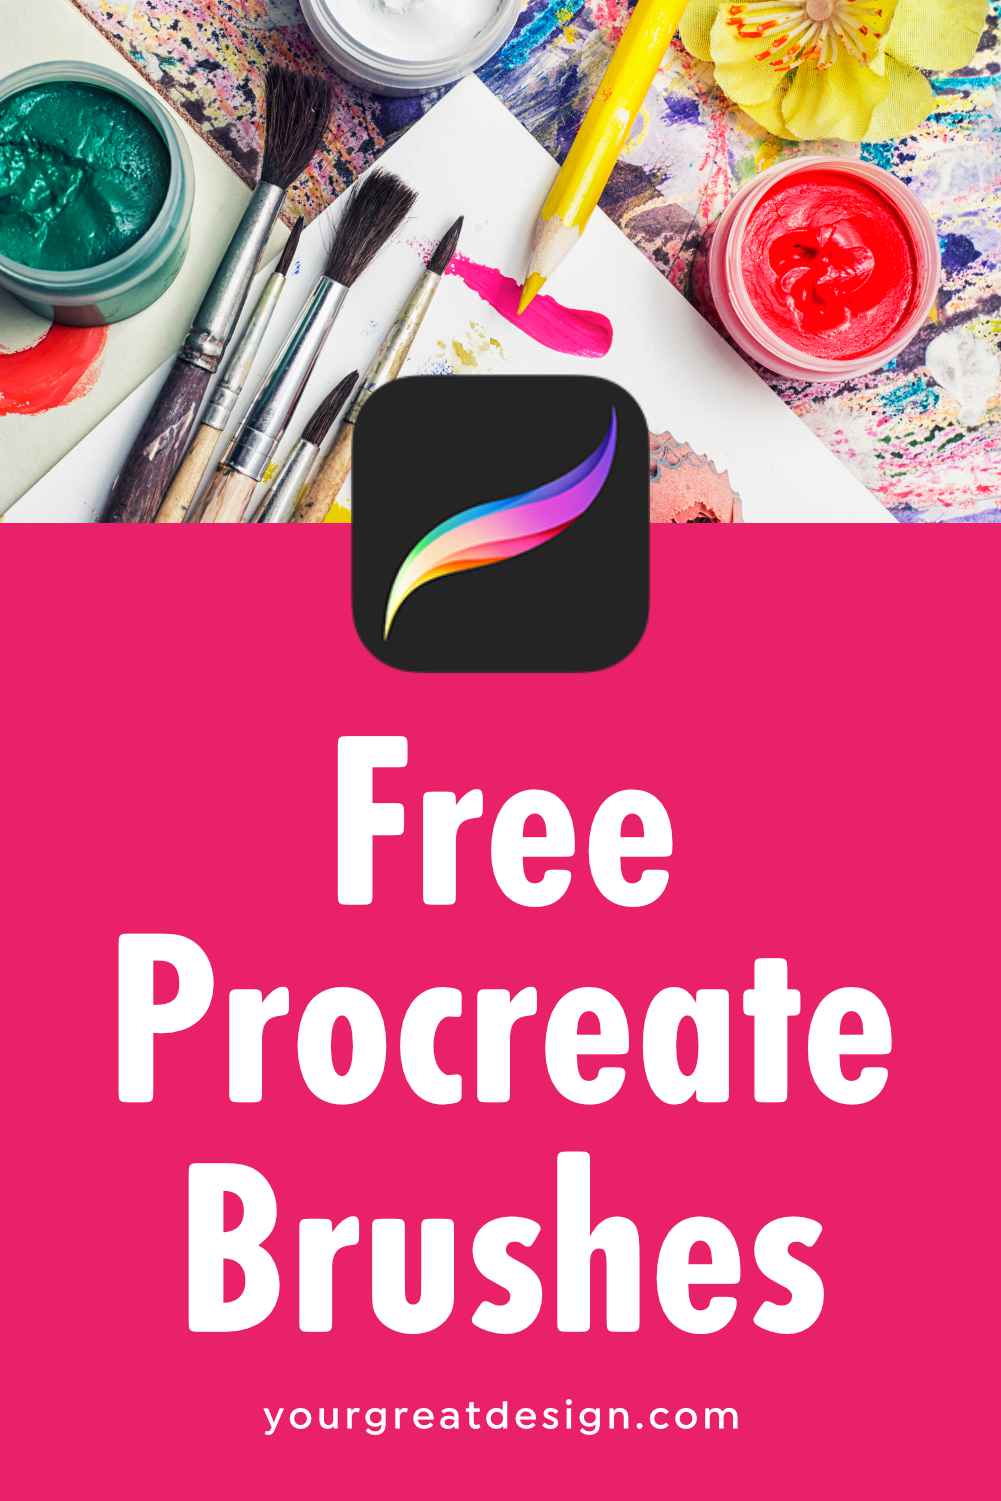 procreate brushes for free